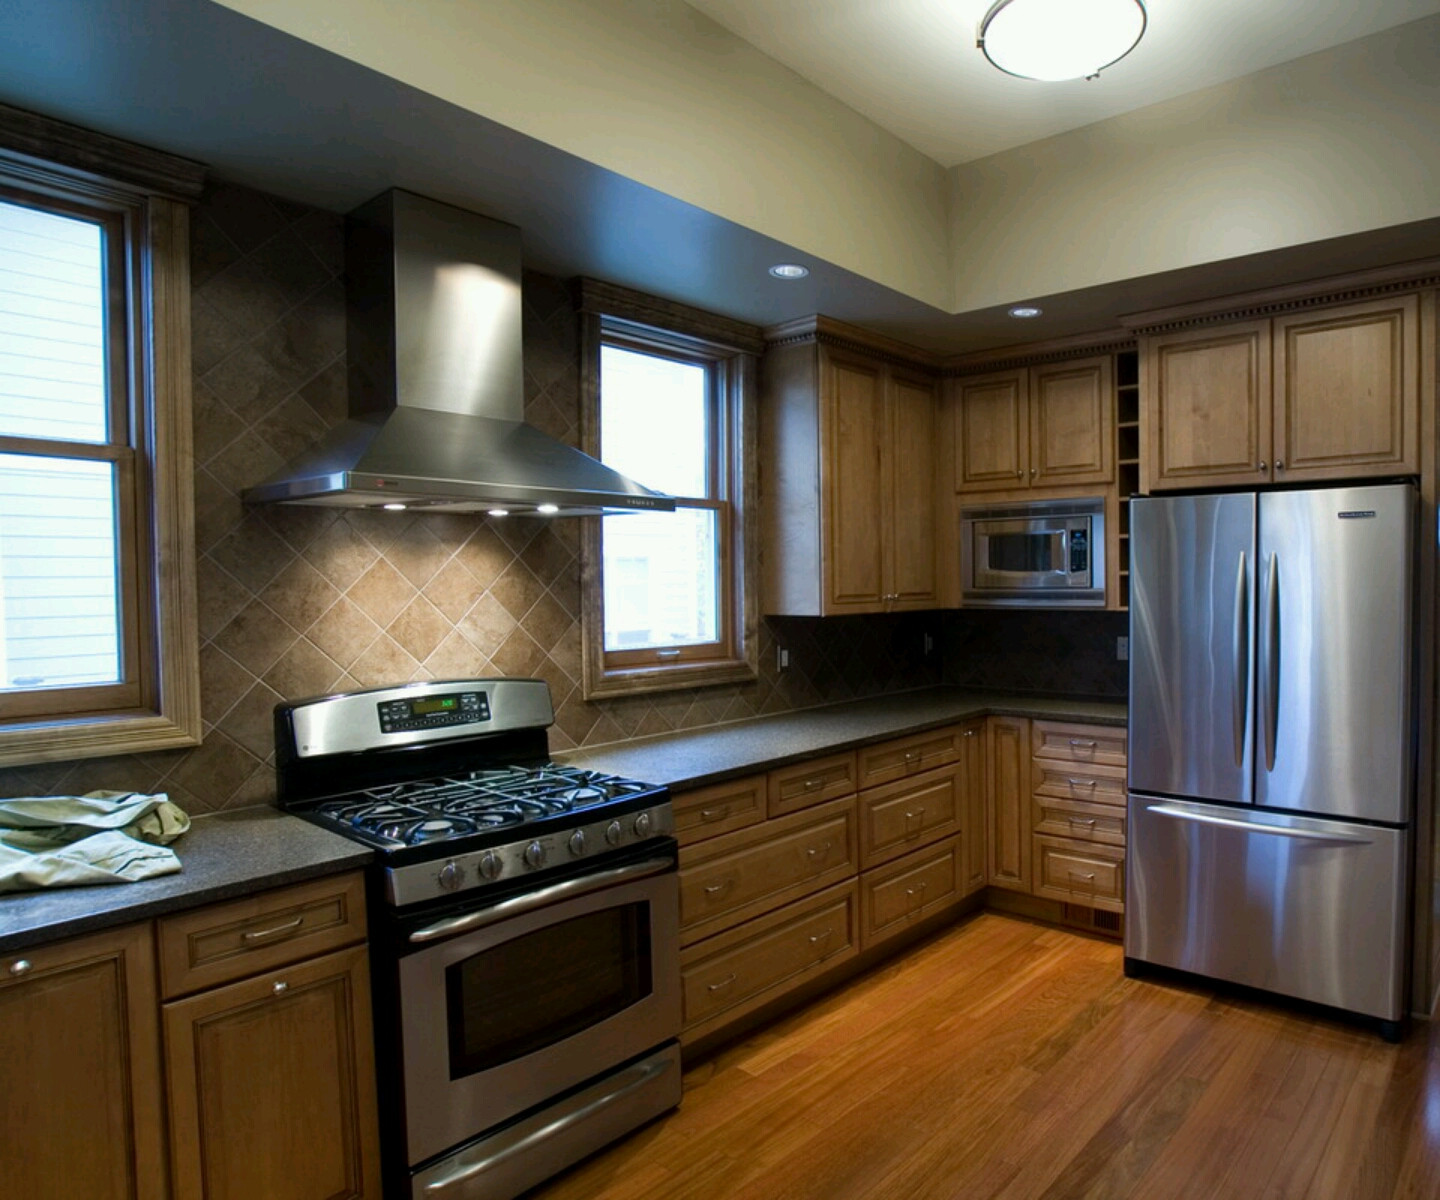 Kitchen Designs For Small Kitchens
 New home designs latest Ultra modern kitchen designs ideas